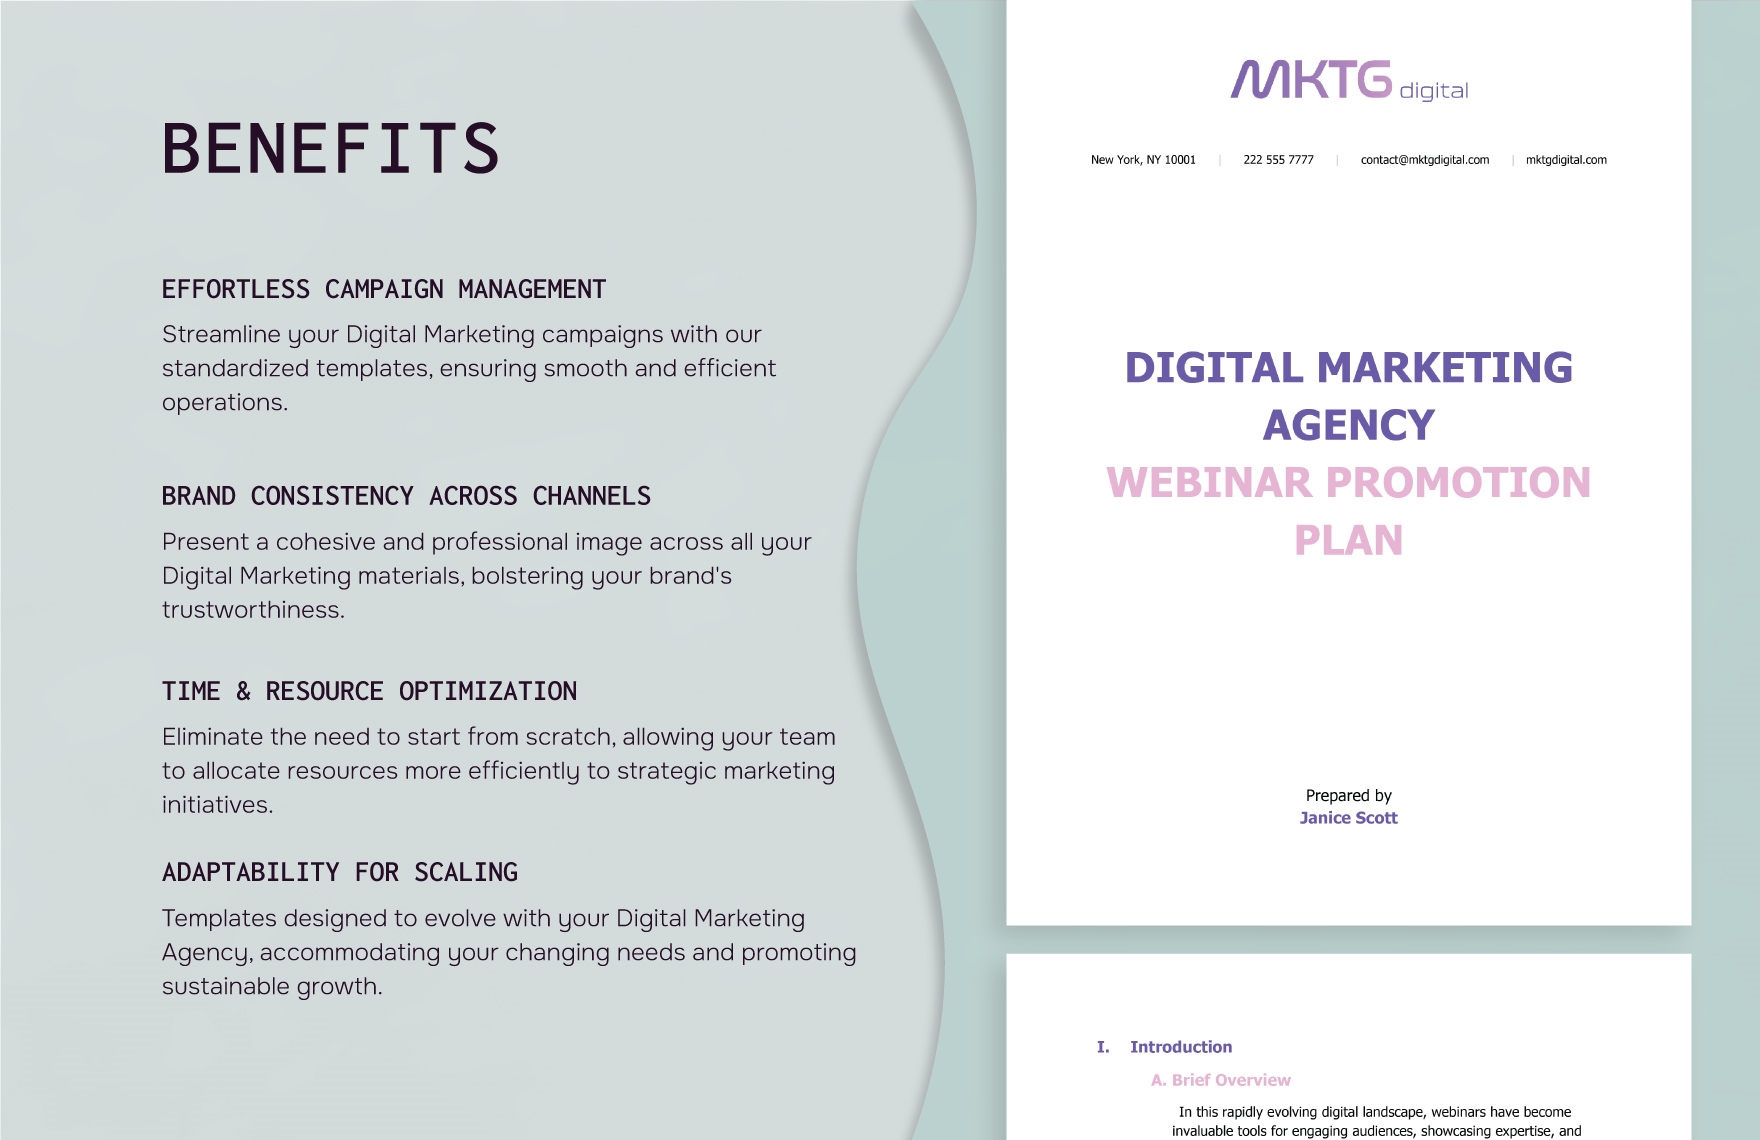 Digital Marketing Agency Webinar Promotion Plan Template